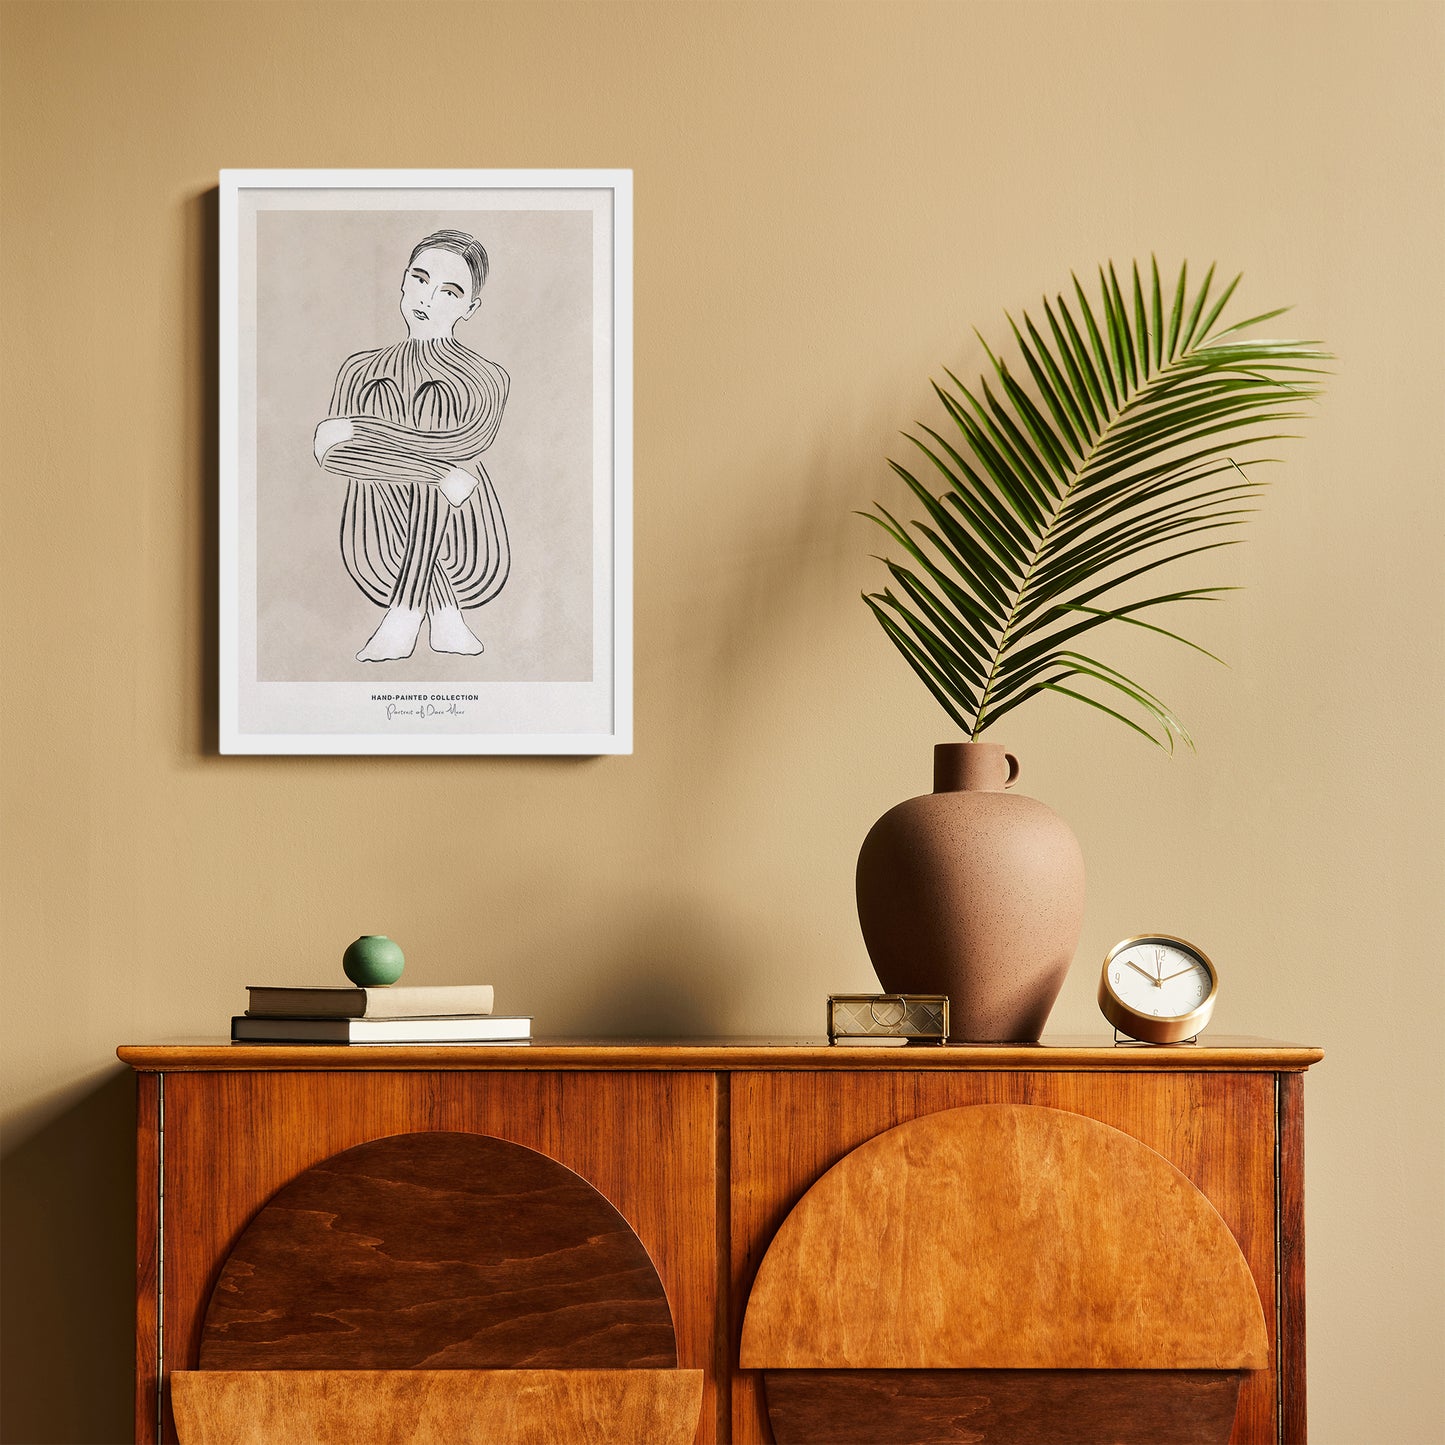 Portrait of Dora Maar | Hand-Painted Collection Poster